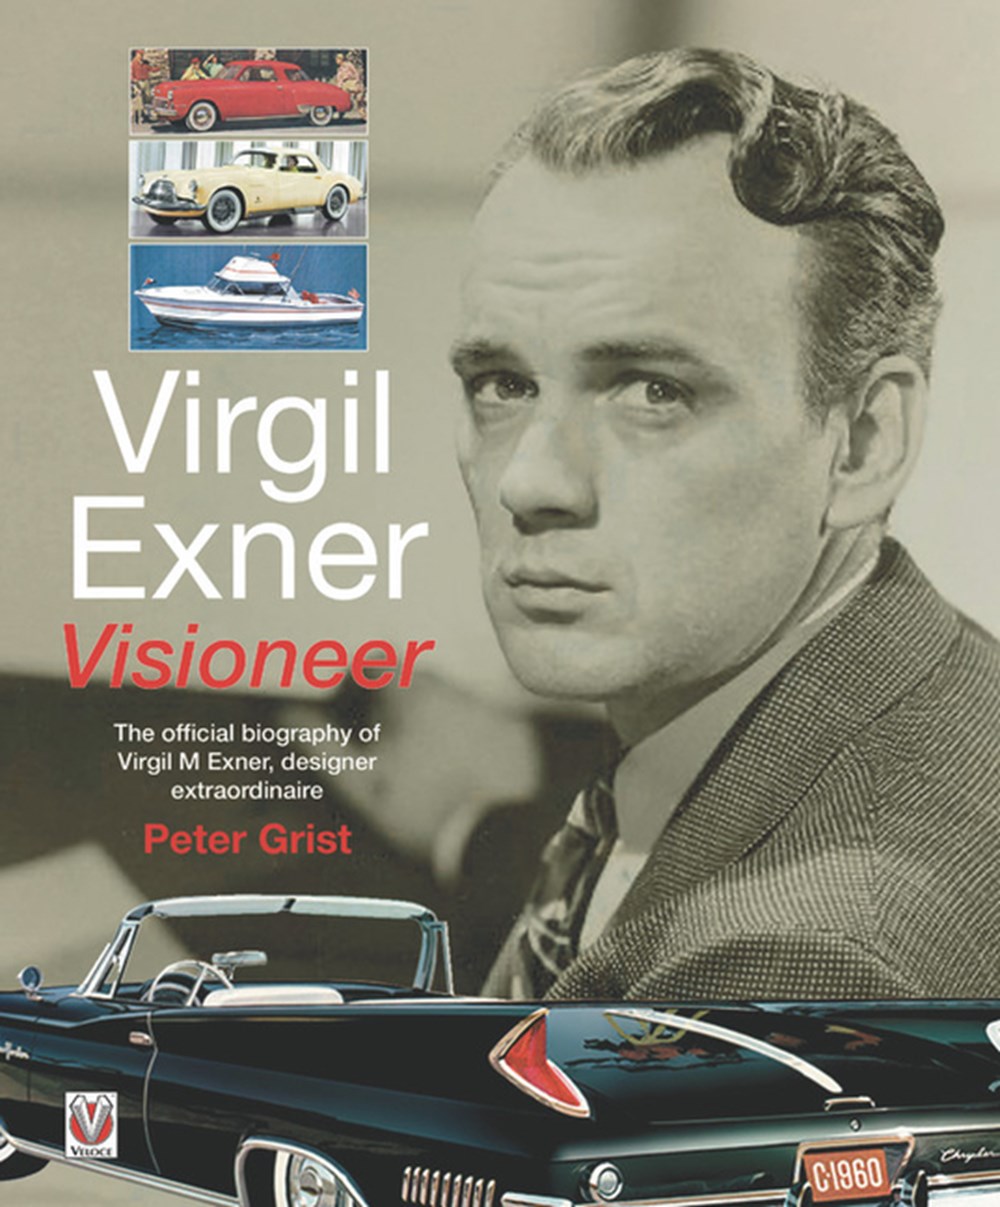 Virgil Exner Visioneer: The Official Biography of Virgil M. Exner, Designer Extraordinaire